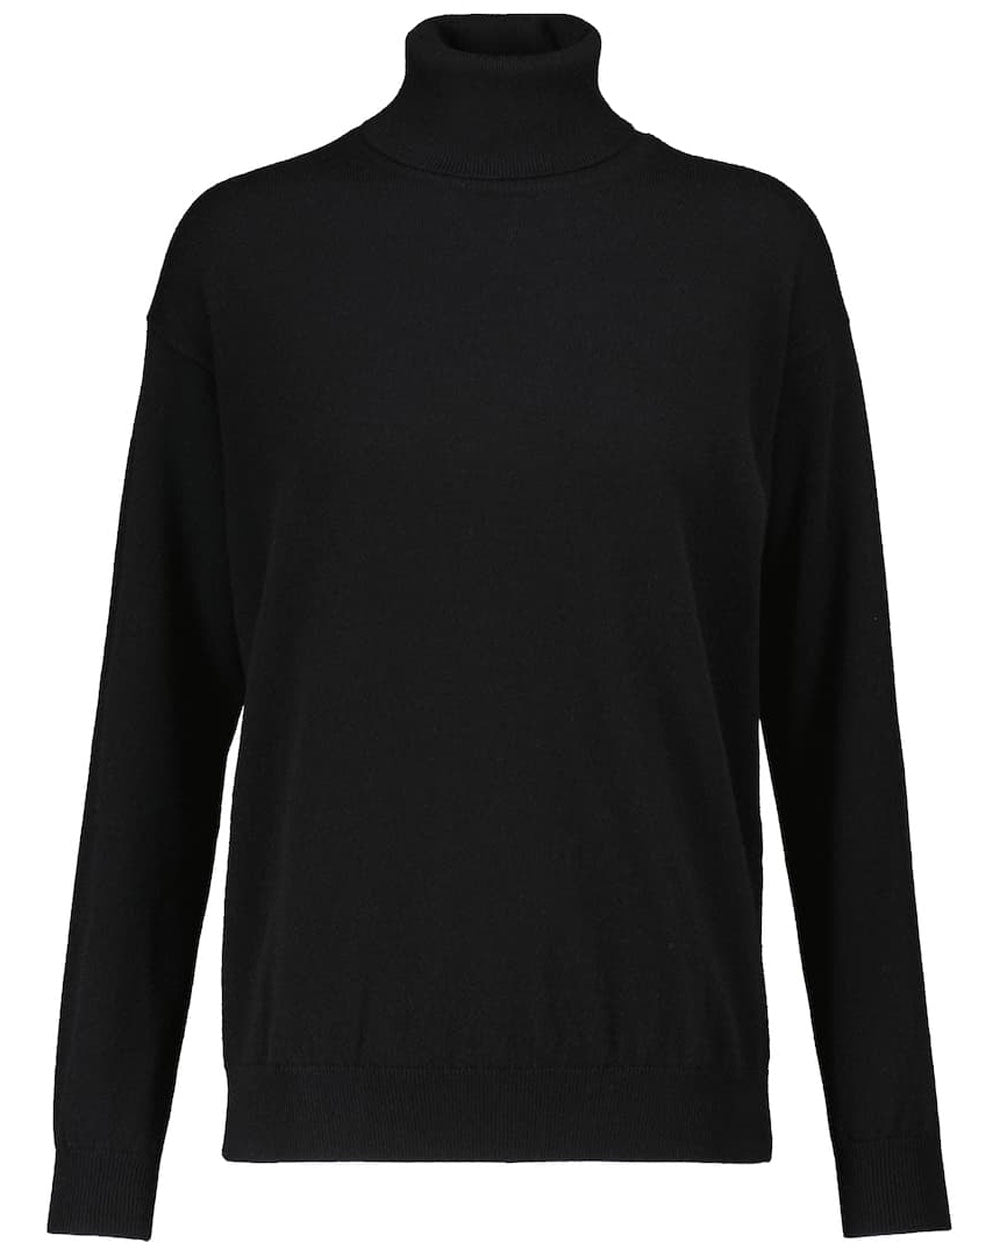 Black Cashmere Turtleneck Sweater